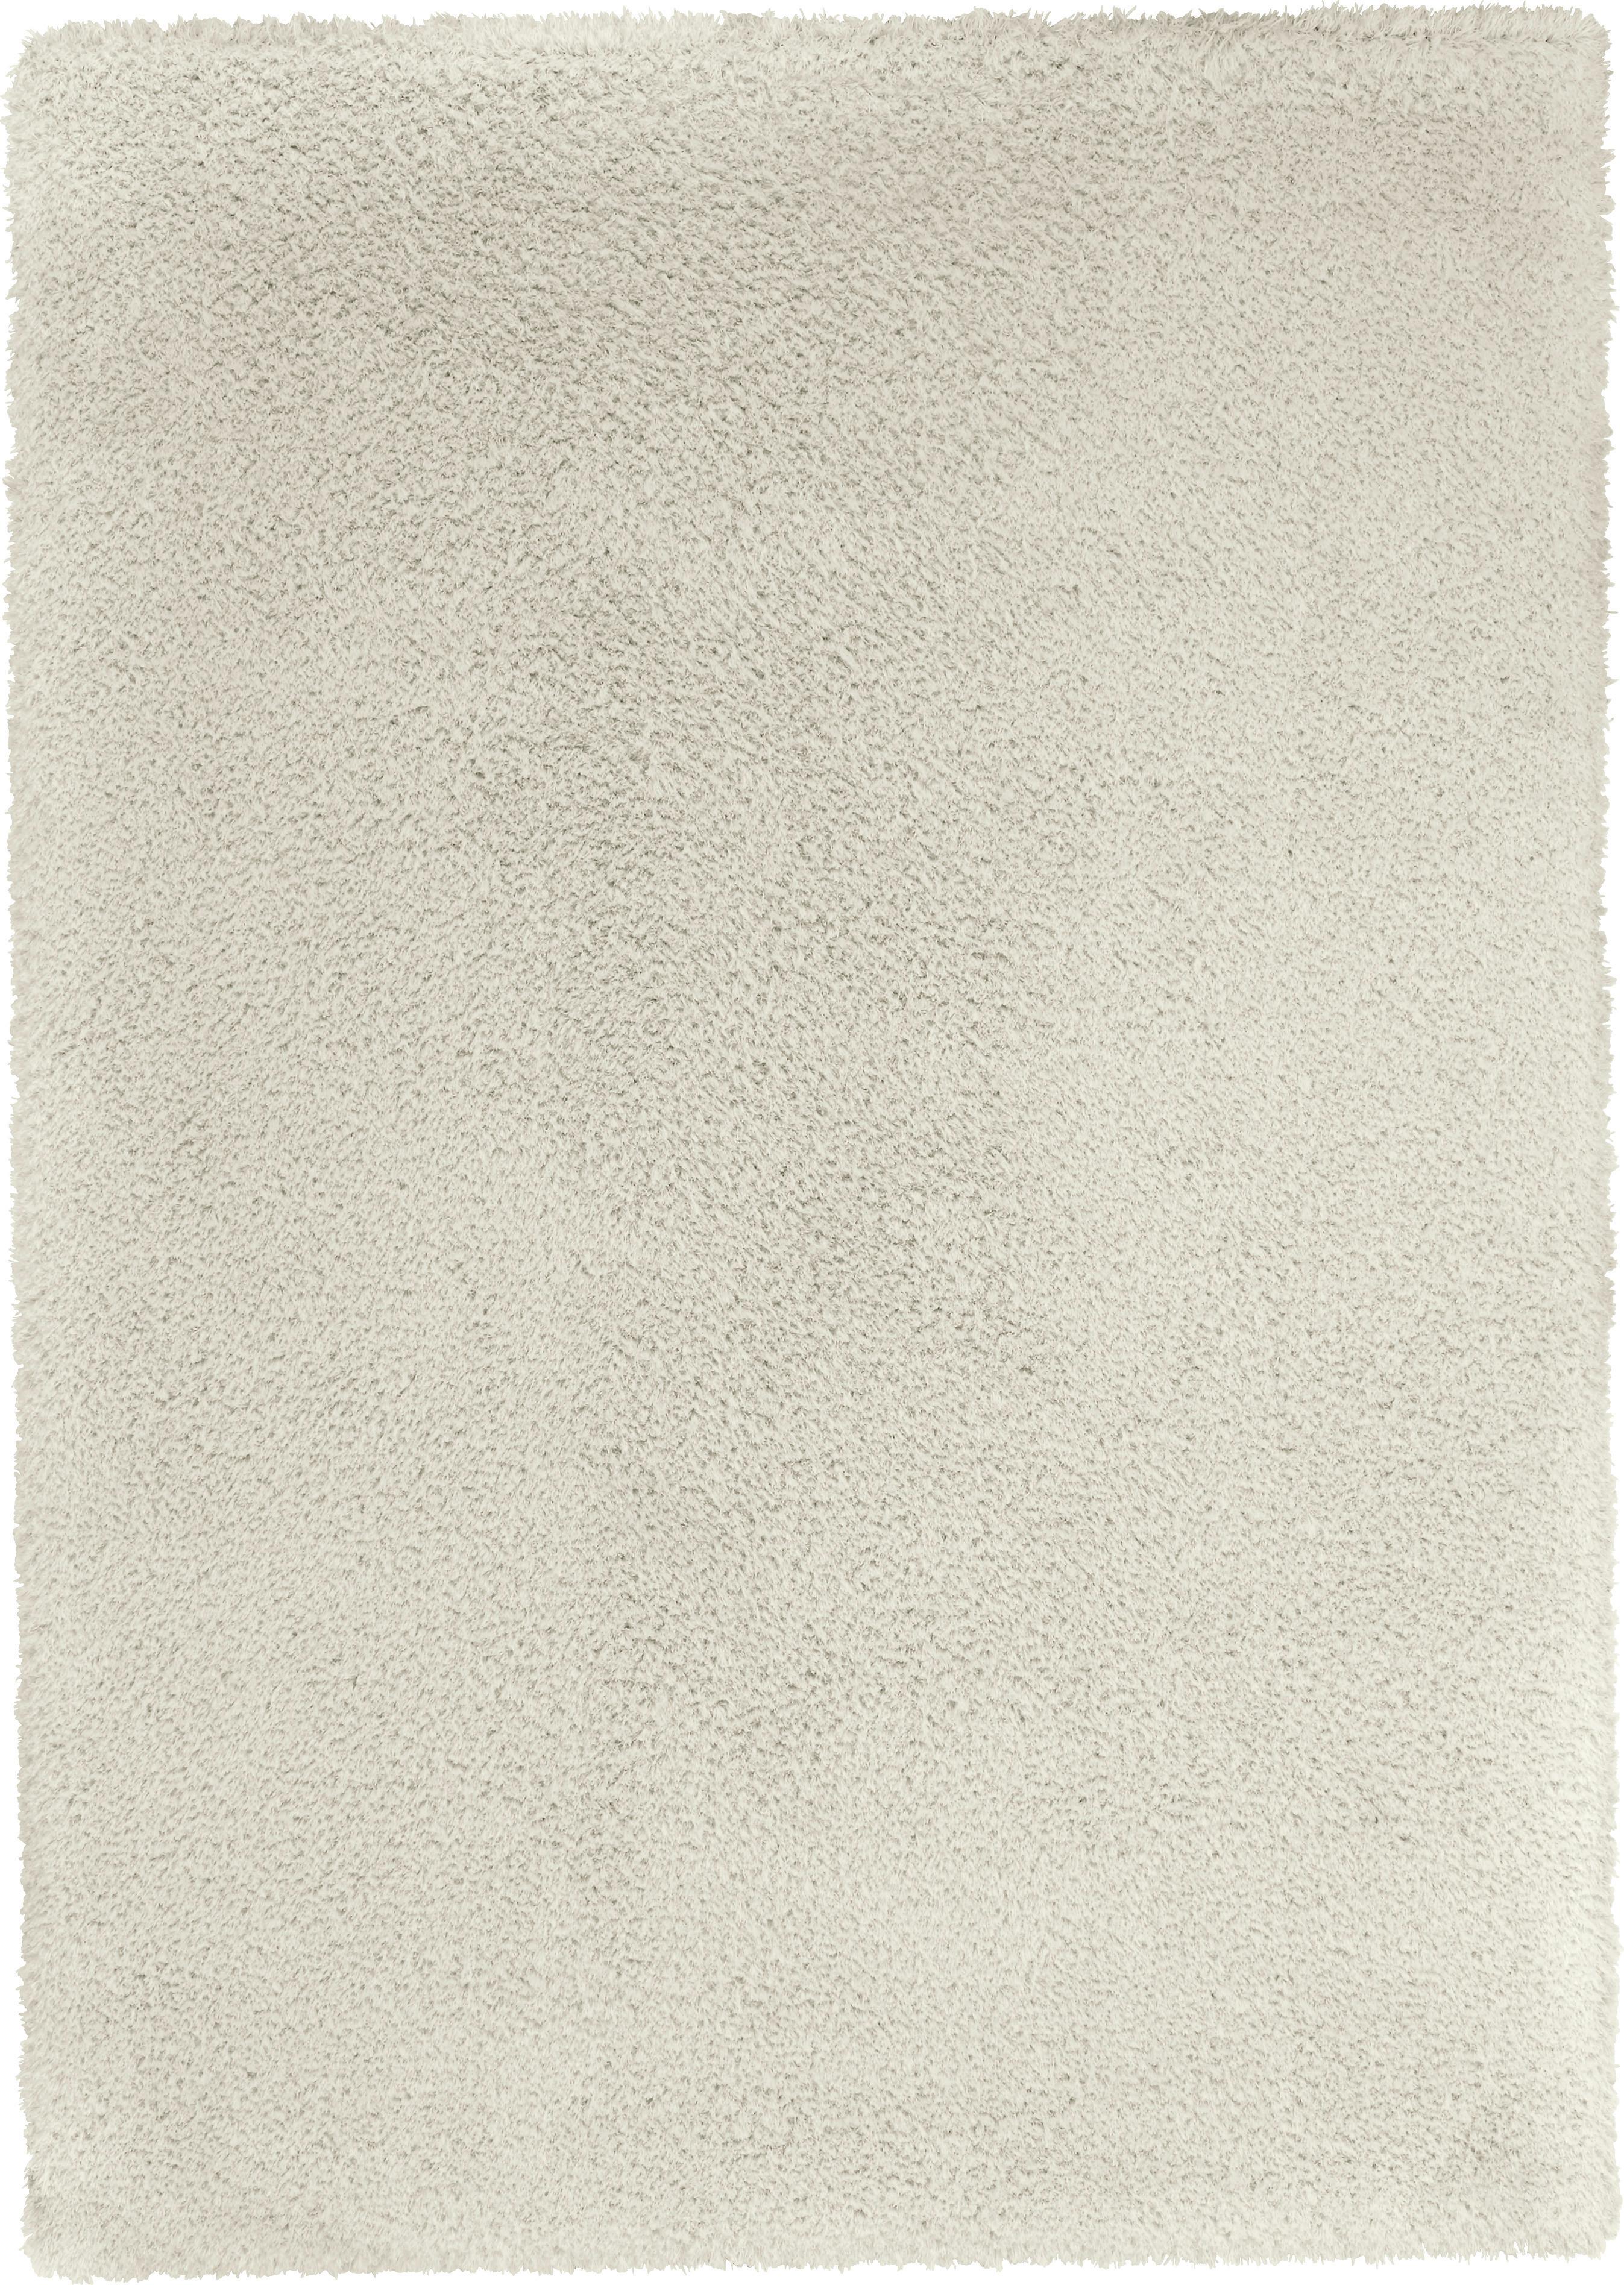 Koberec Stefan 3, 160/230cm, Biela - biela, Moderný, textil (160/230cm) - Modern Living